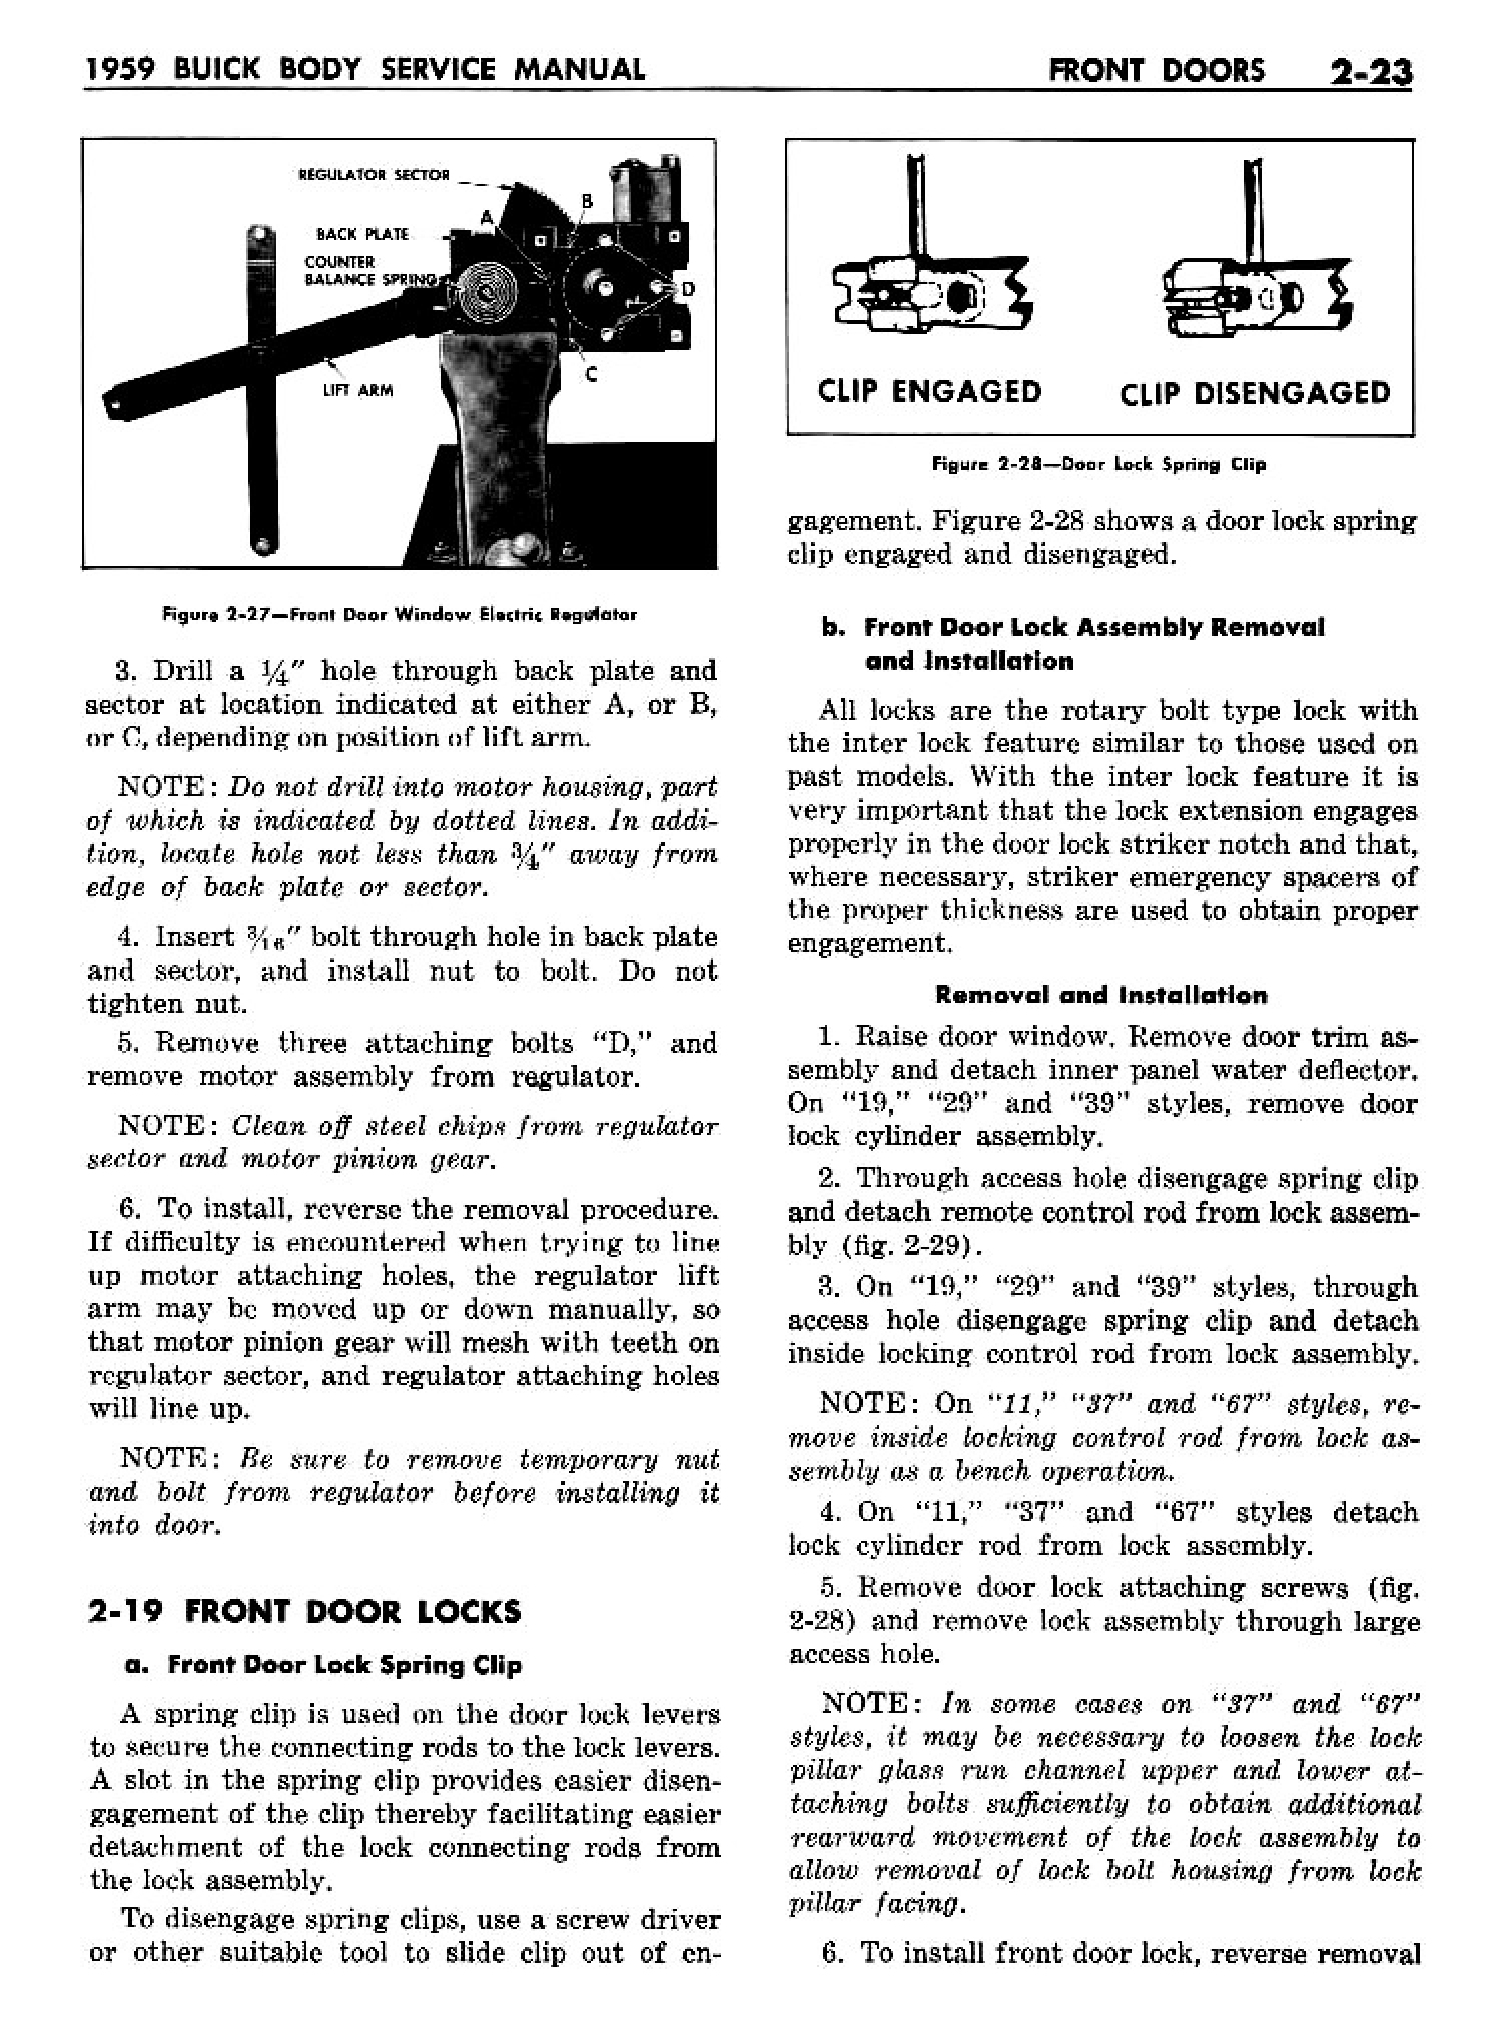 n_03 1959 Buick Body Service-Doors_23.jpg